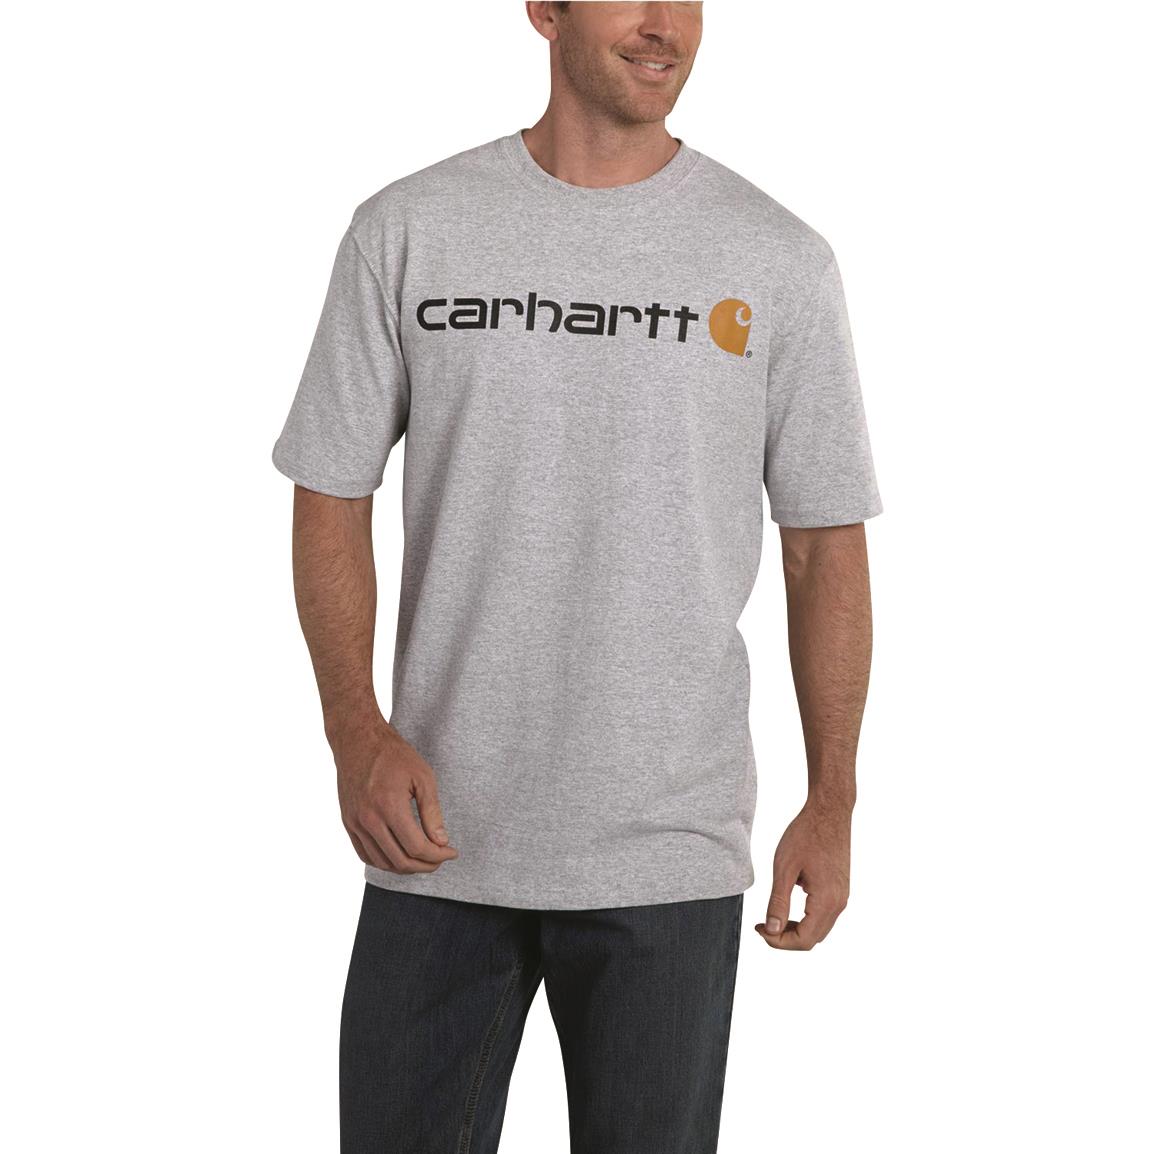 Carhartt Men's Short Sleeve Logo Shirt, Heather Gray